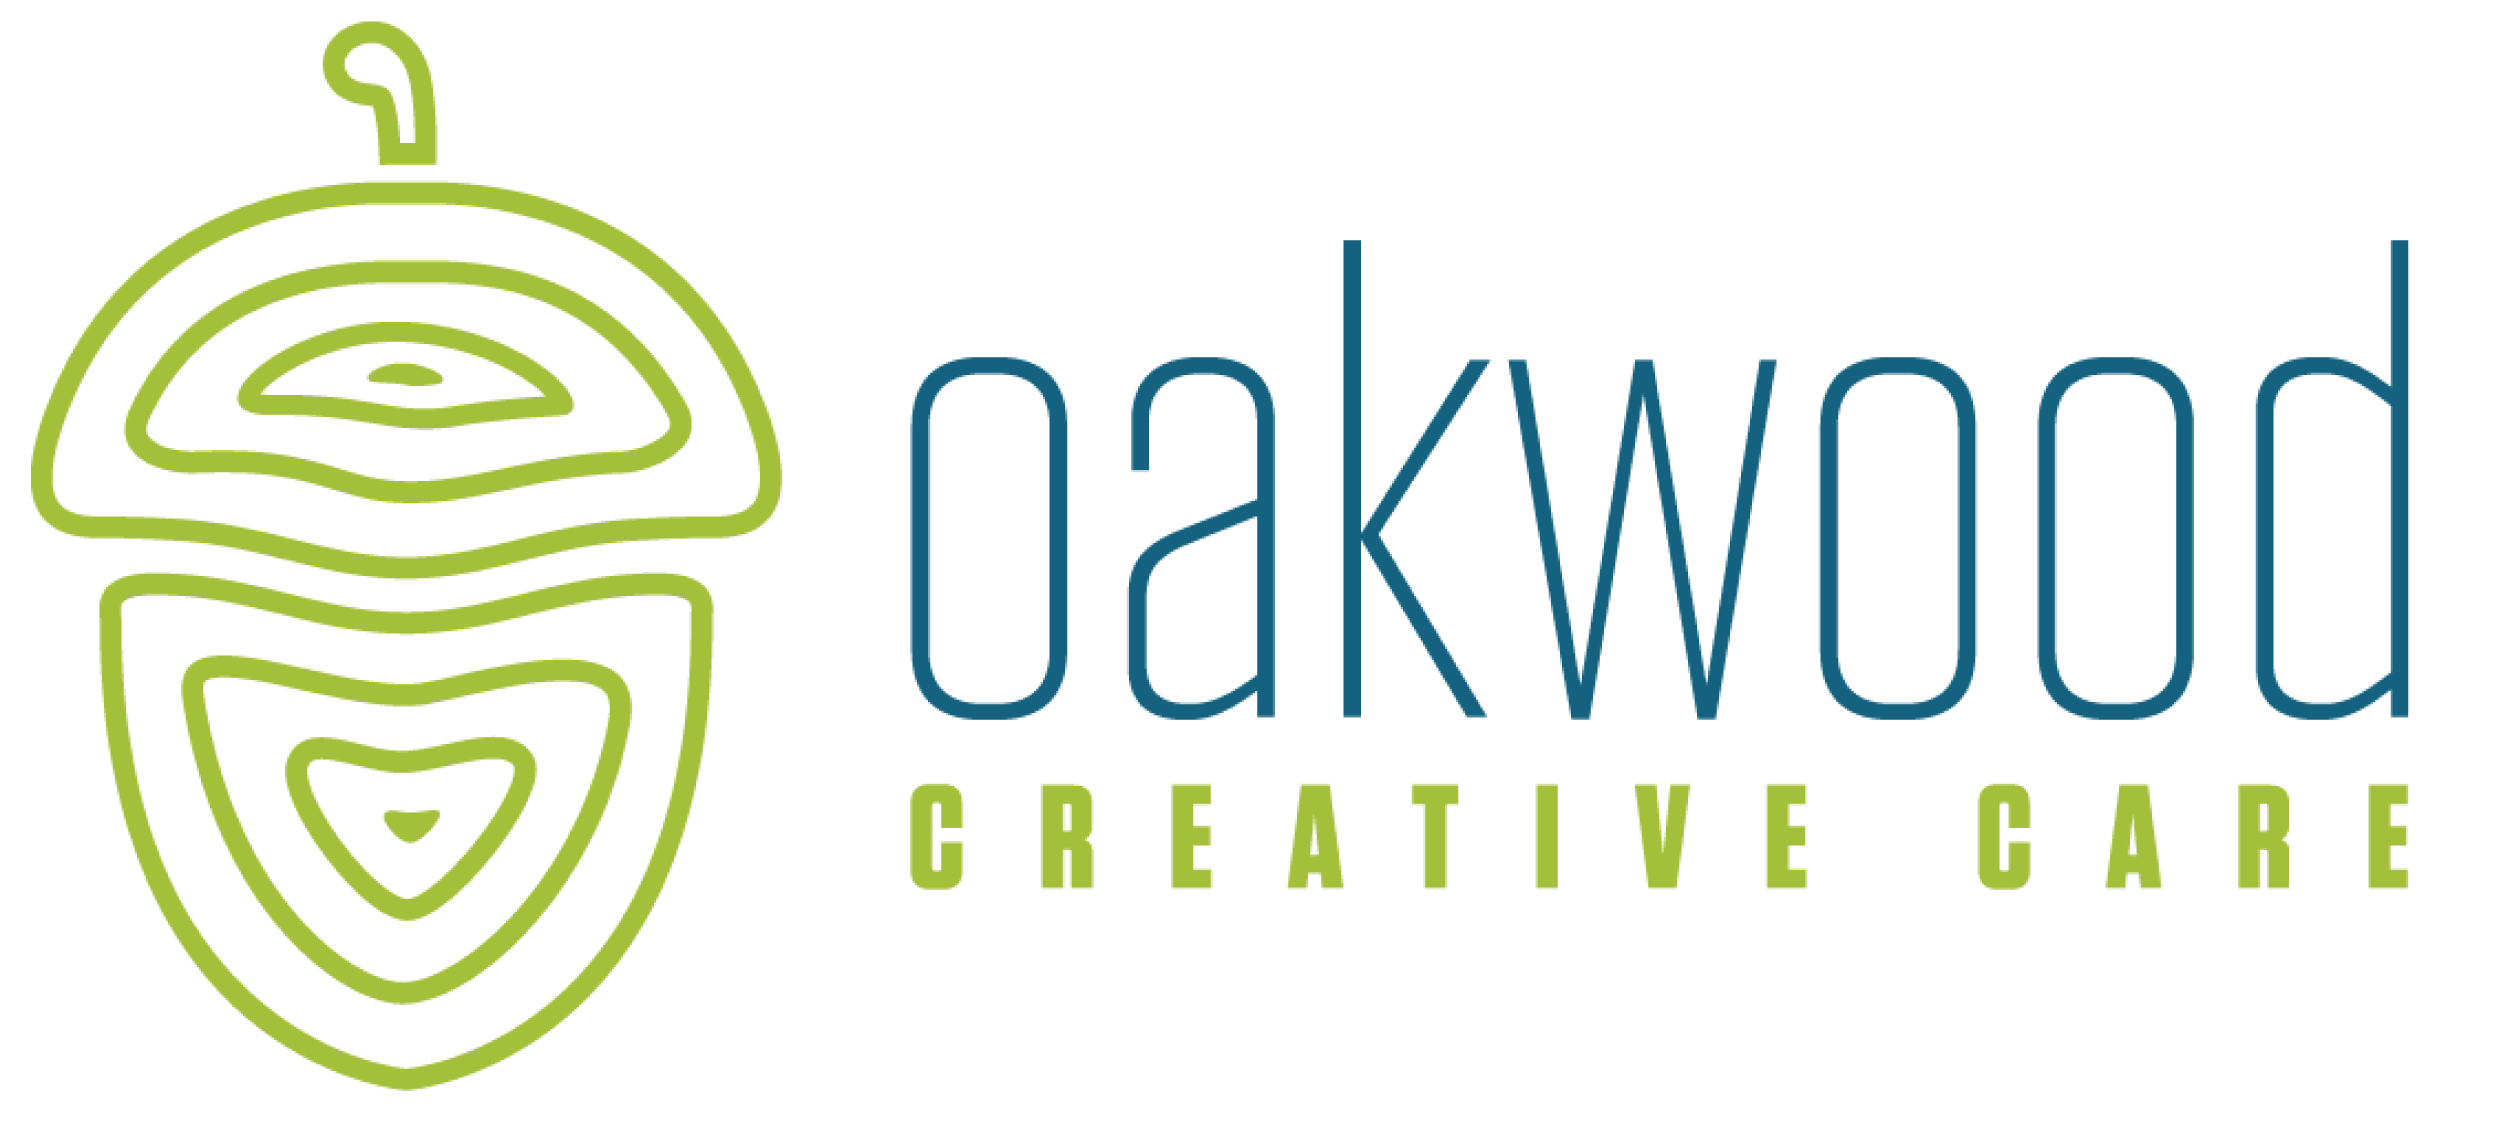 oakwood creative care